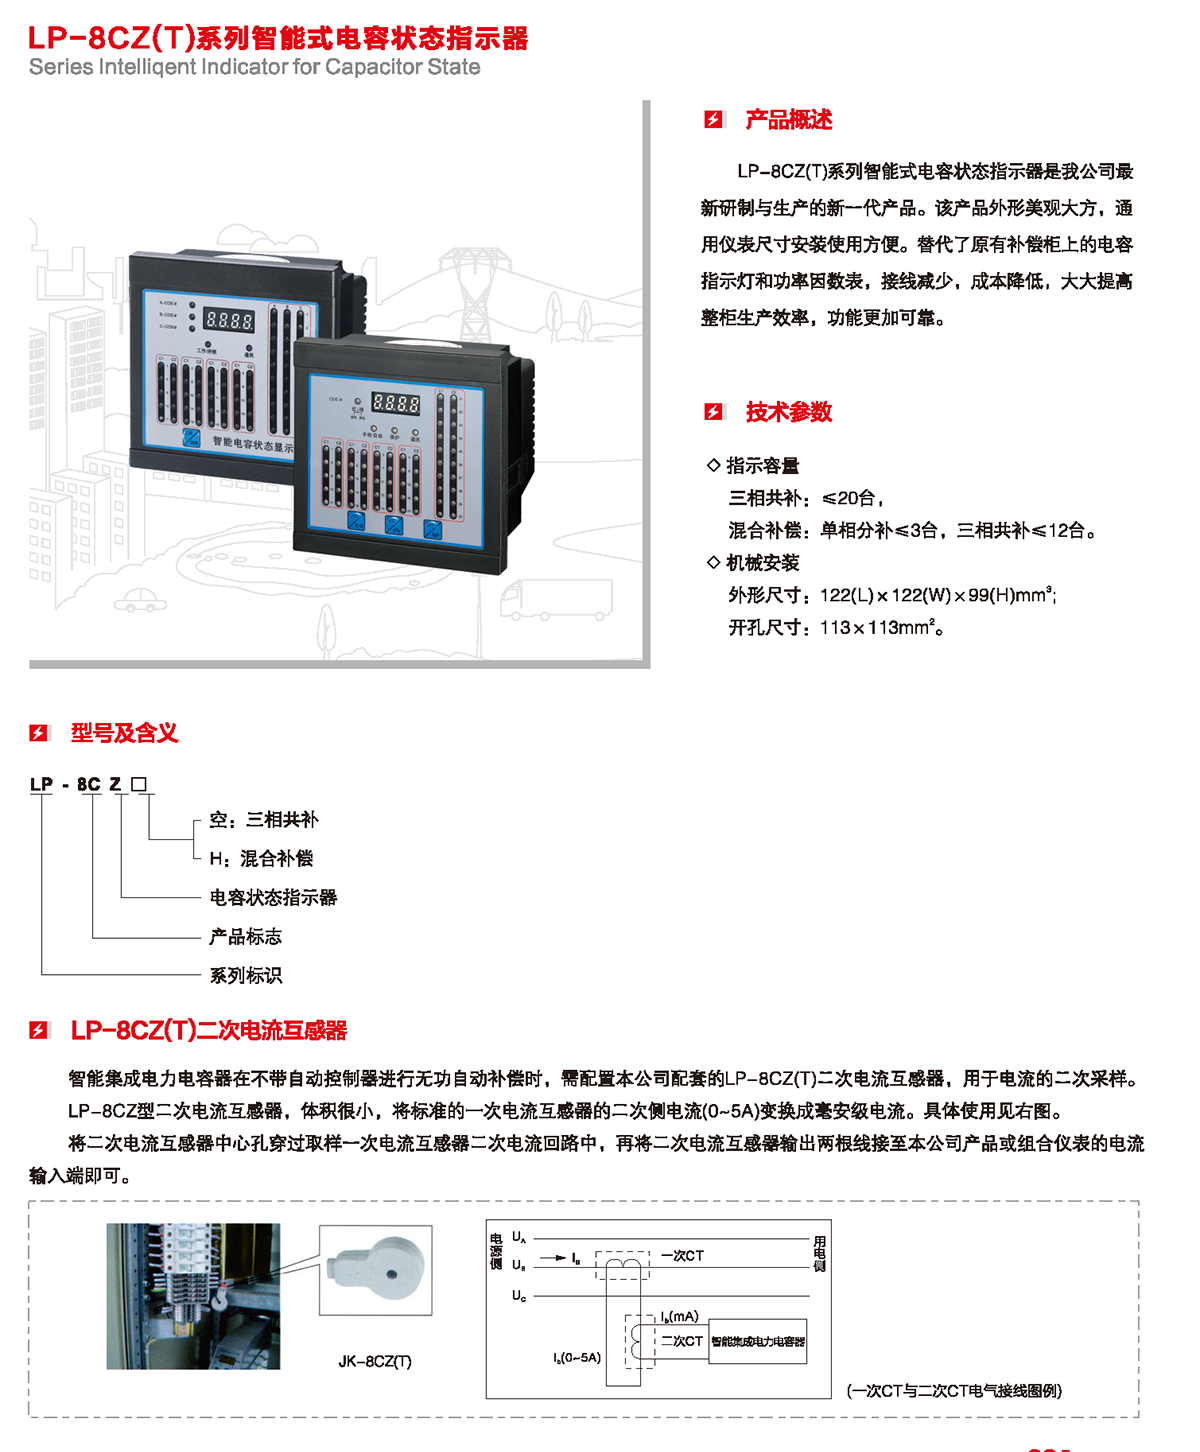 LP-8CZ（T）系列智能式電容狀態指示器產品詳情